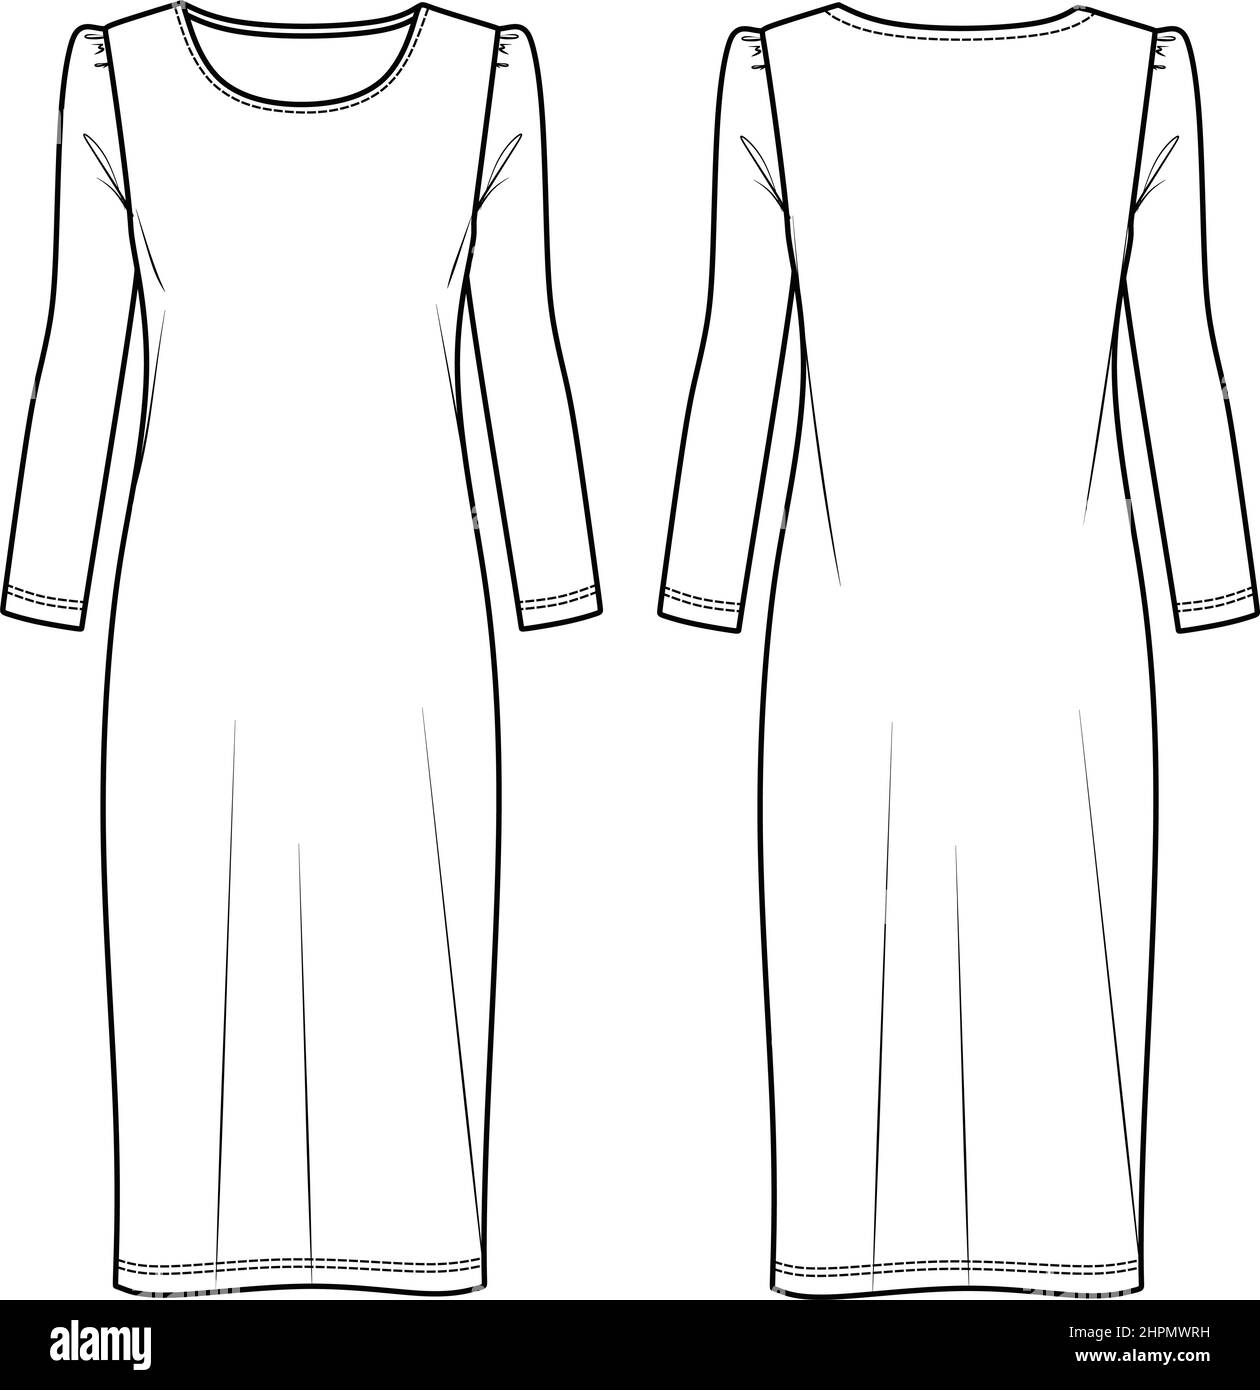 Dress Fashion Flat Sketch Template. Dress Technical Drawing Stock